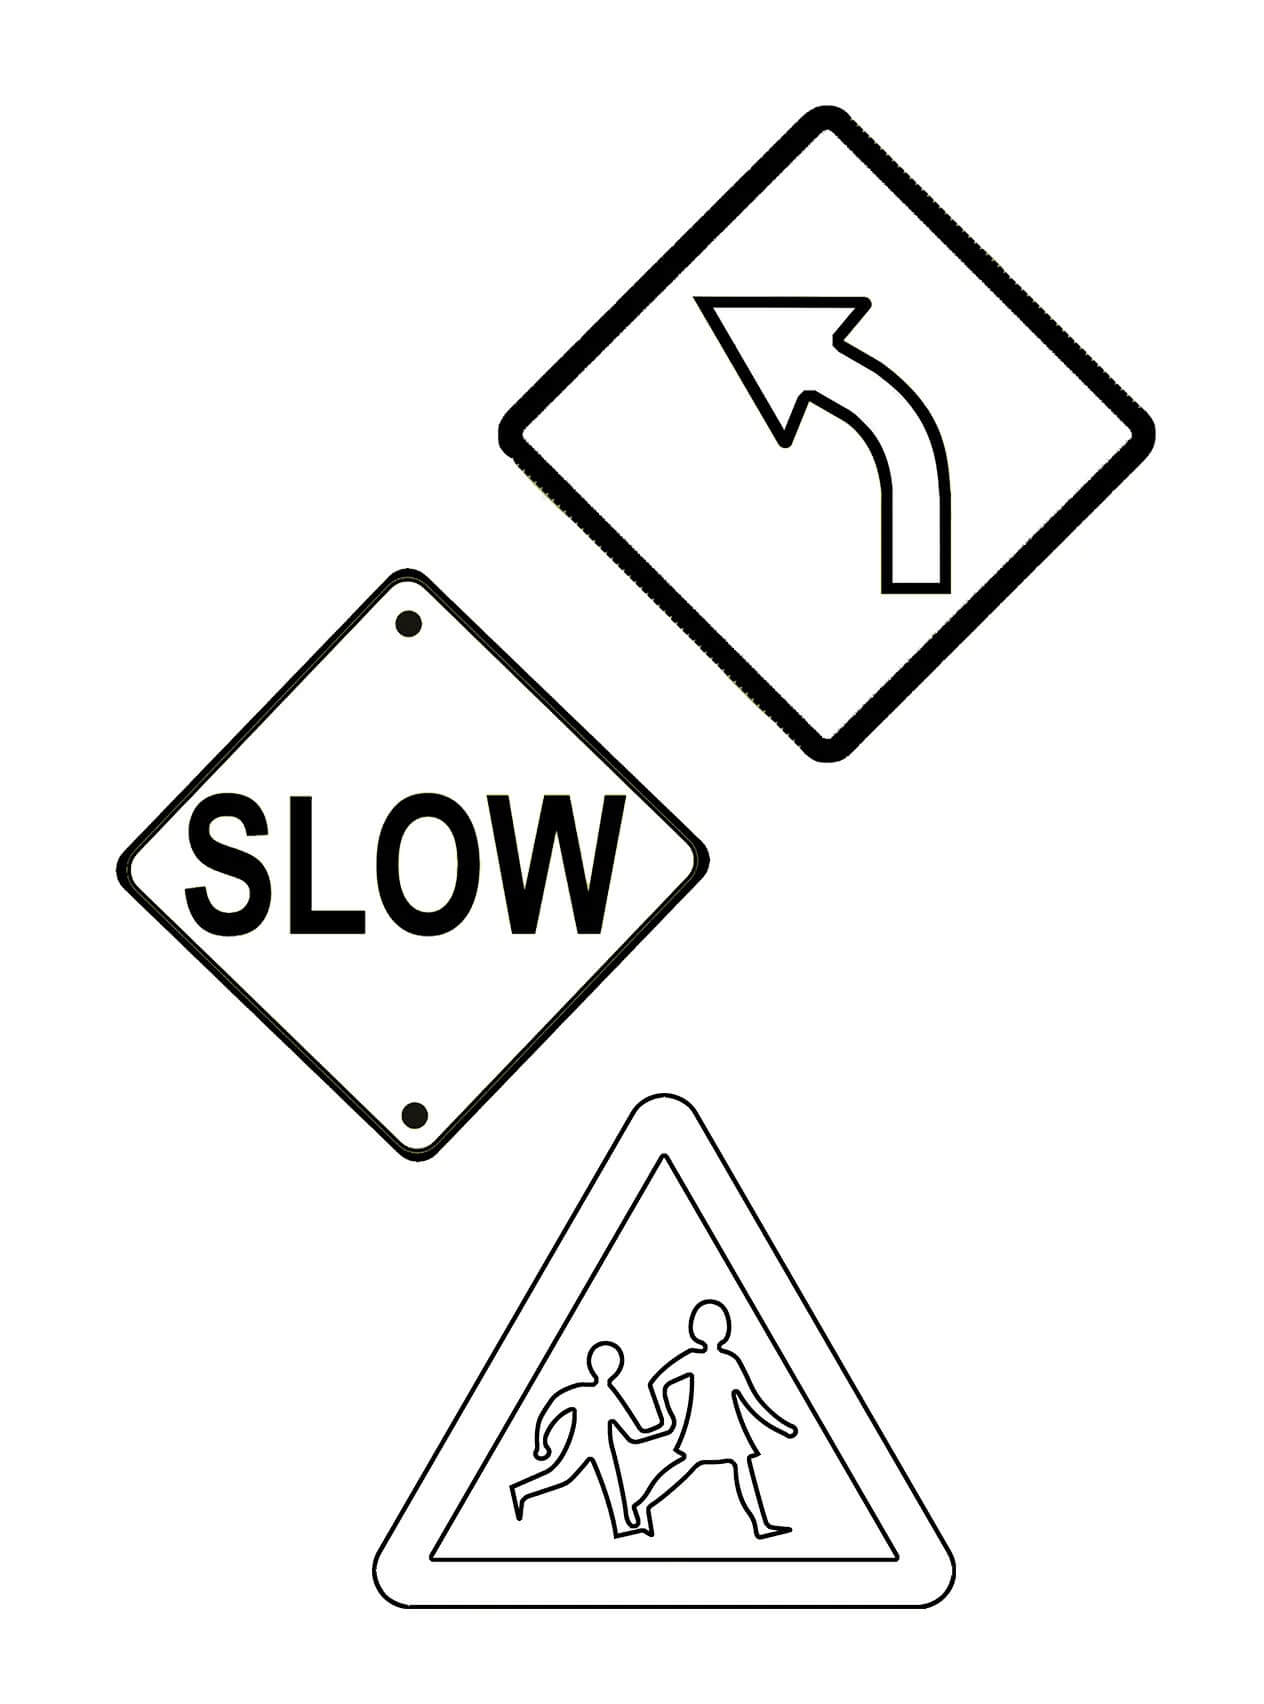 Drie straatnaamborden in verkeers- en straatveiligheid